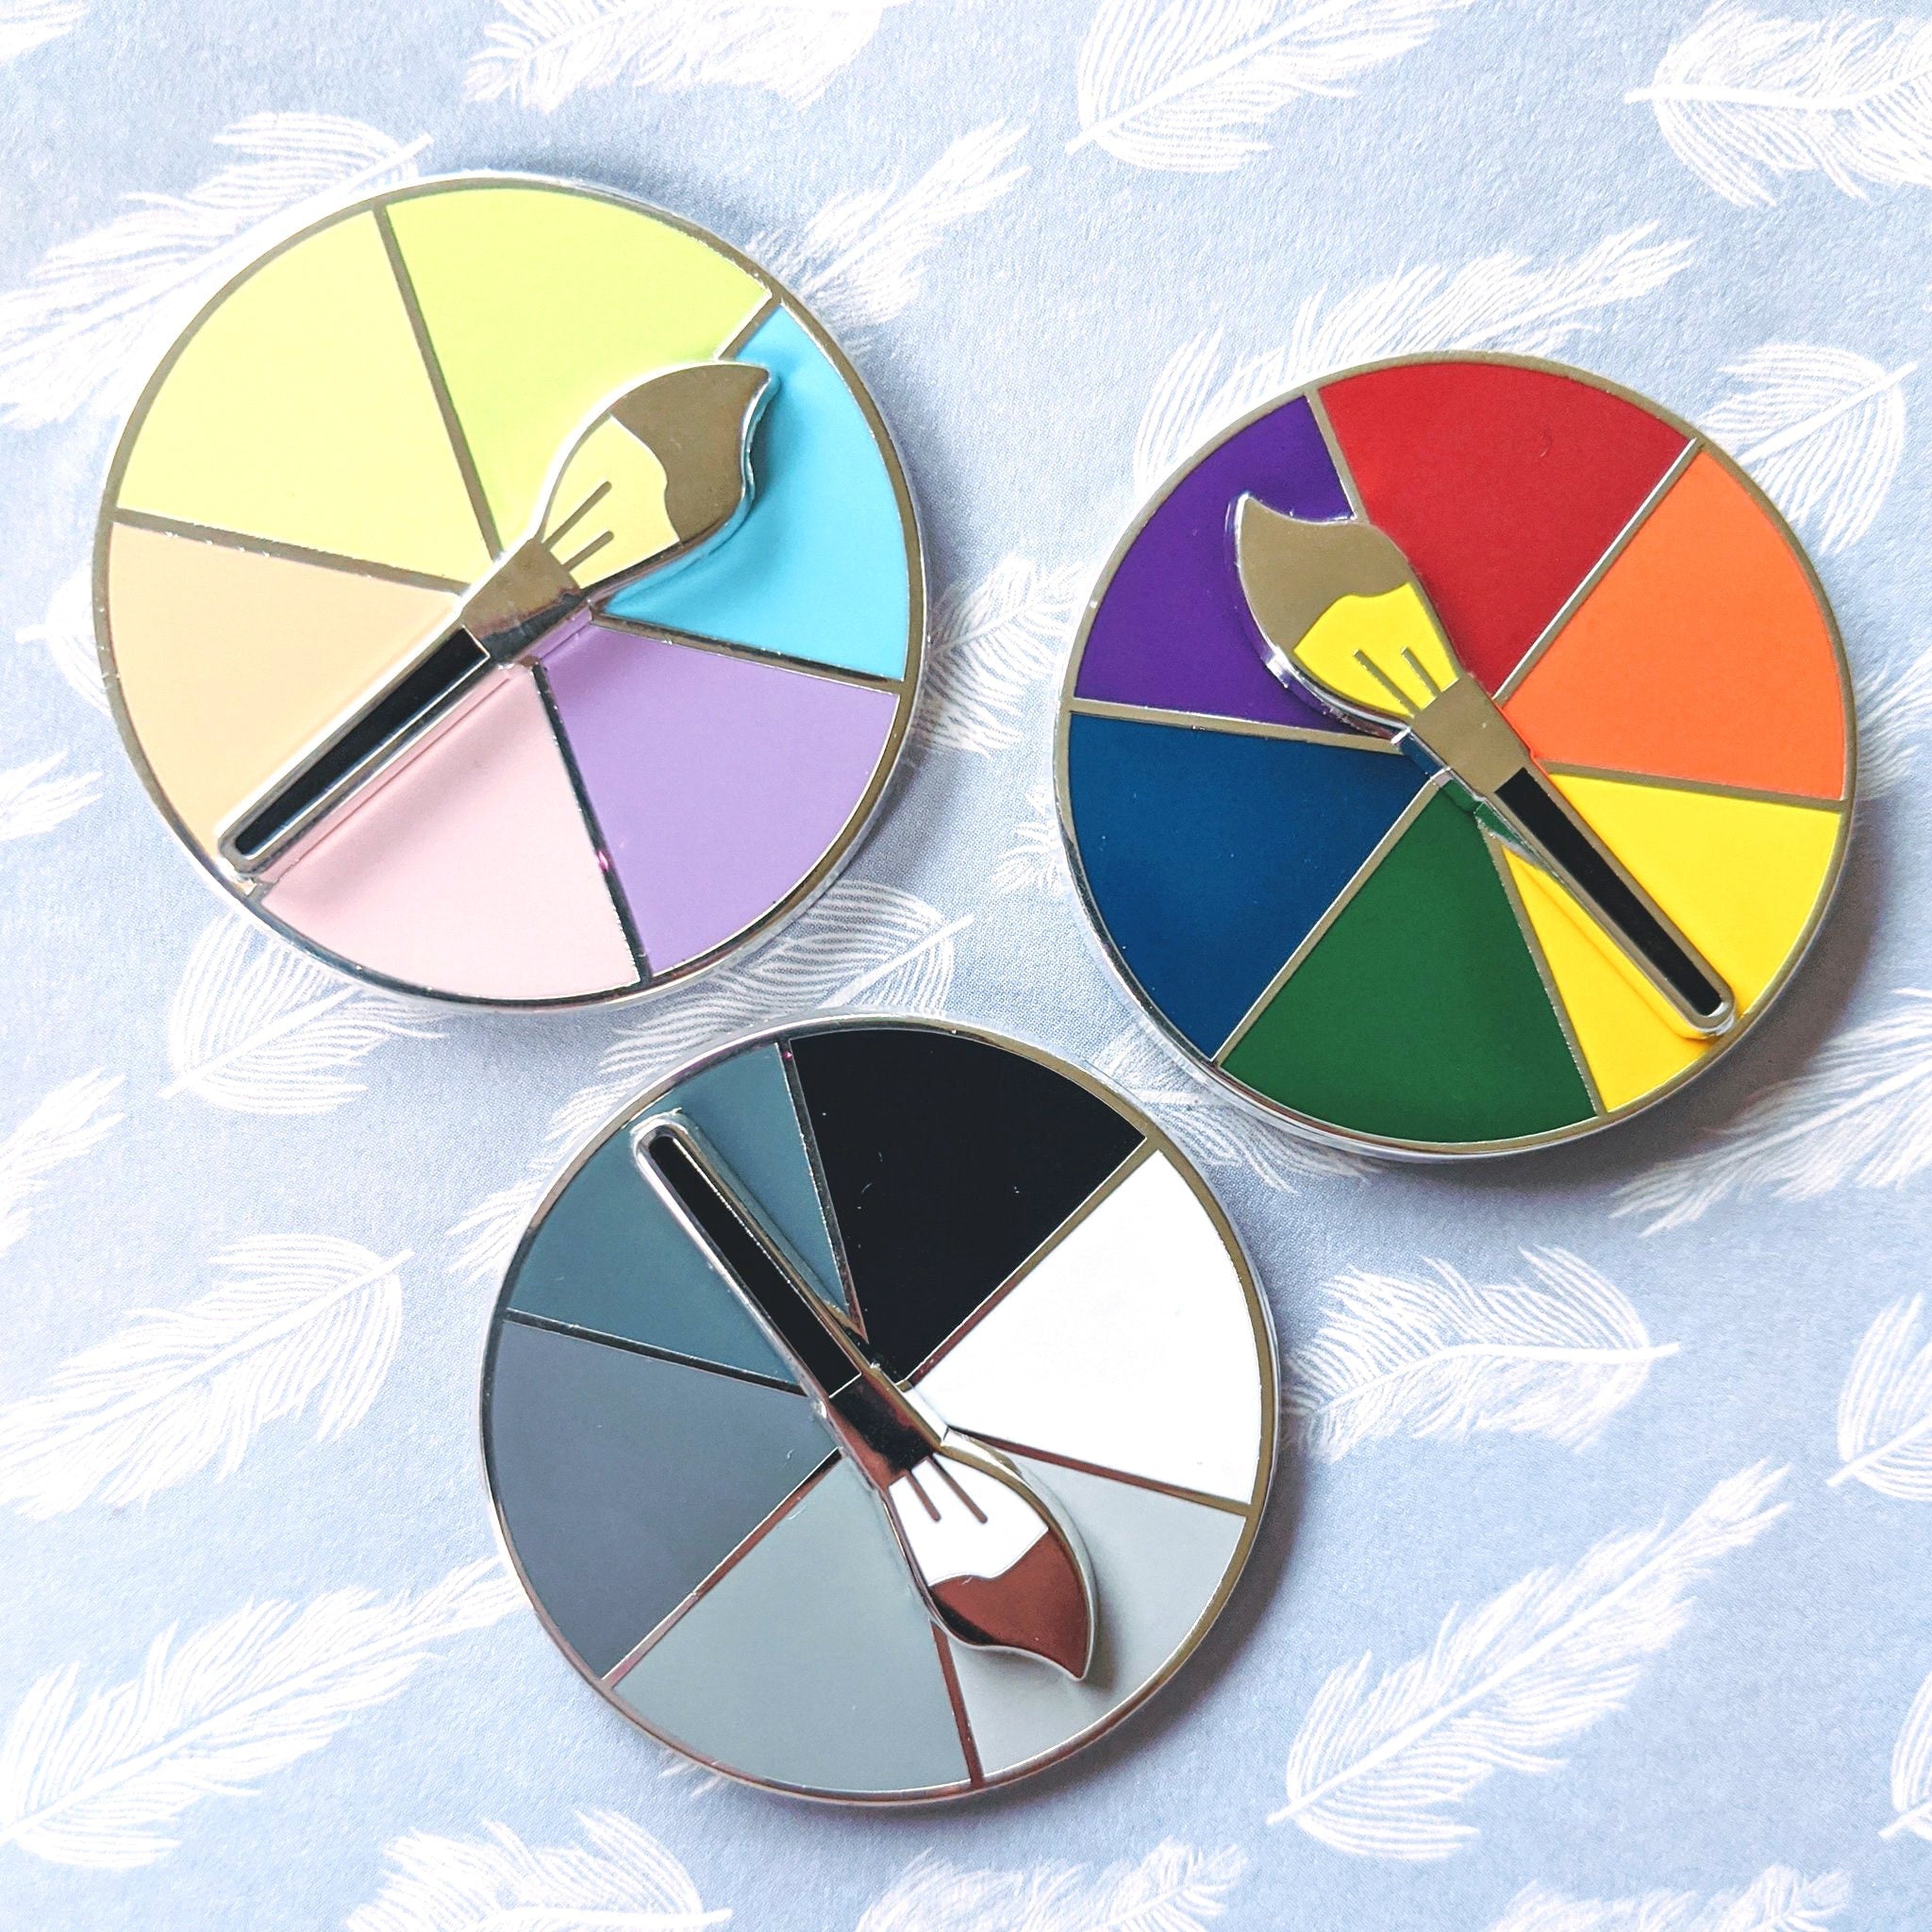 Jewel Tone Paintbrush Paint Brush Palette Colour Spinner Picker - 1.5" Enamel Pin Lapel Metal Badge